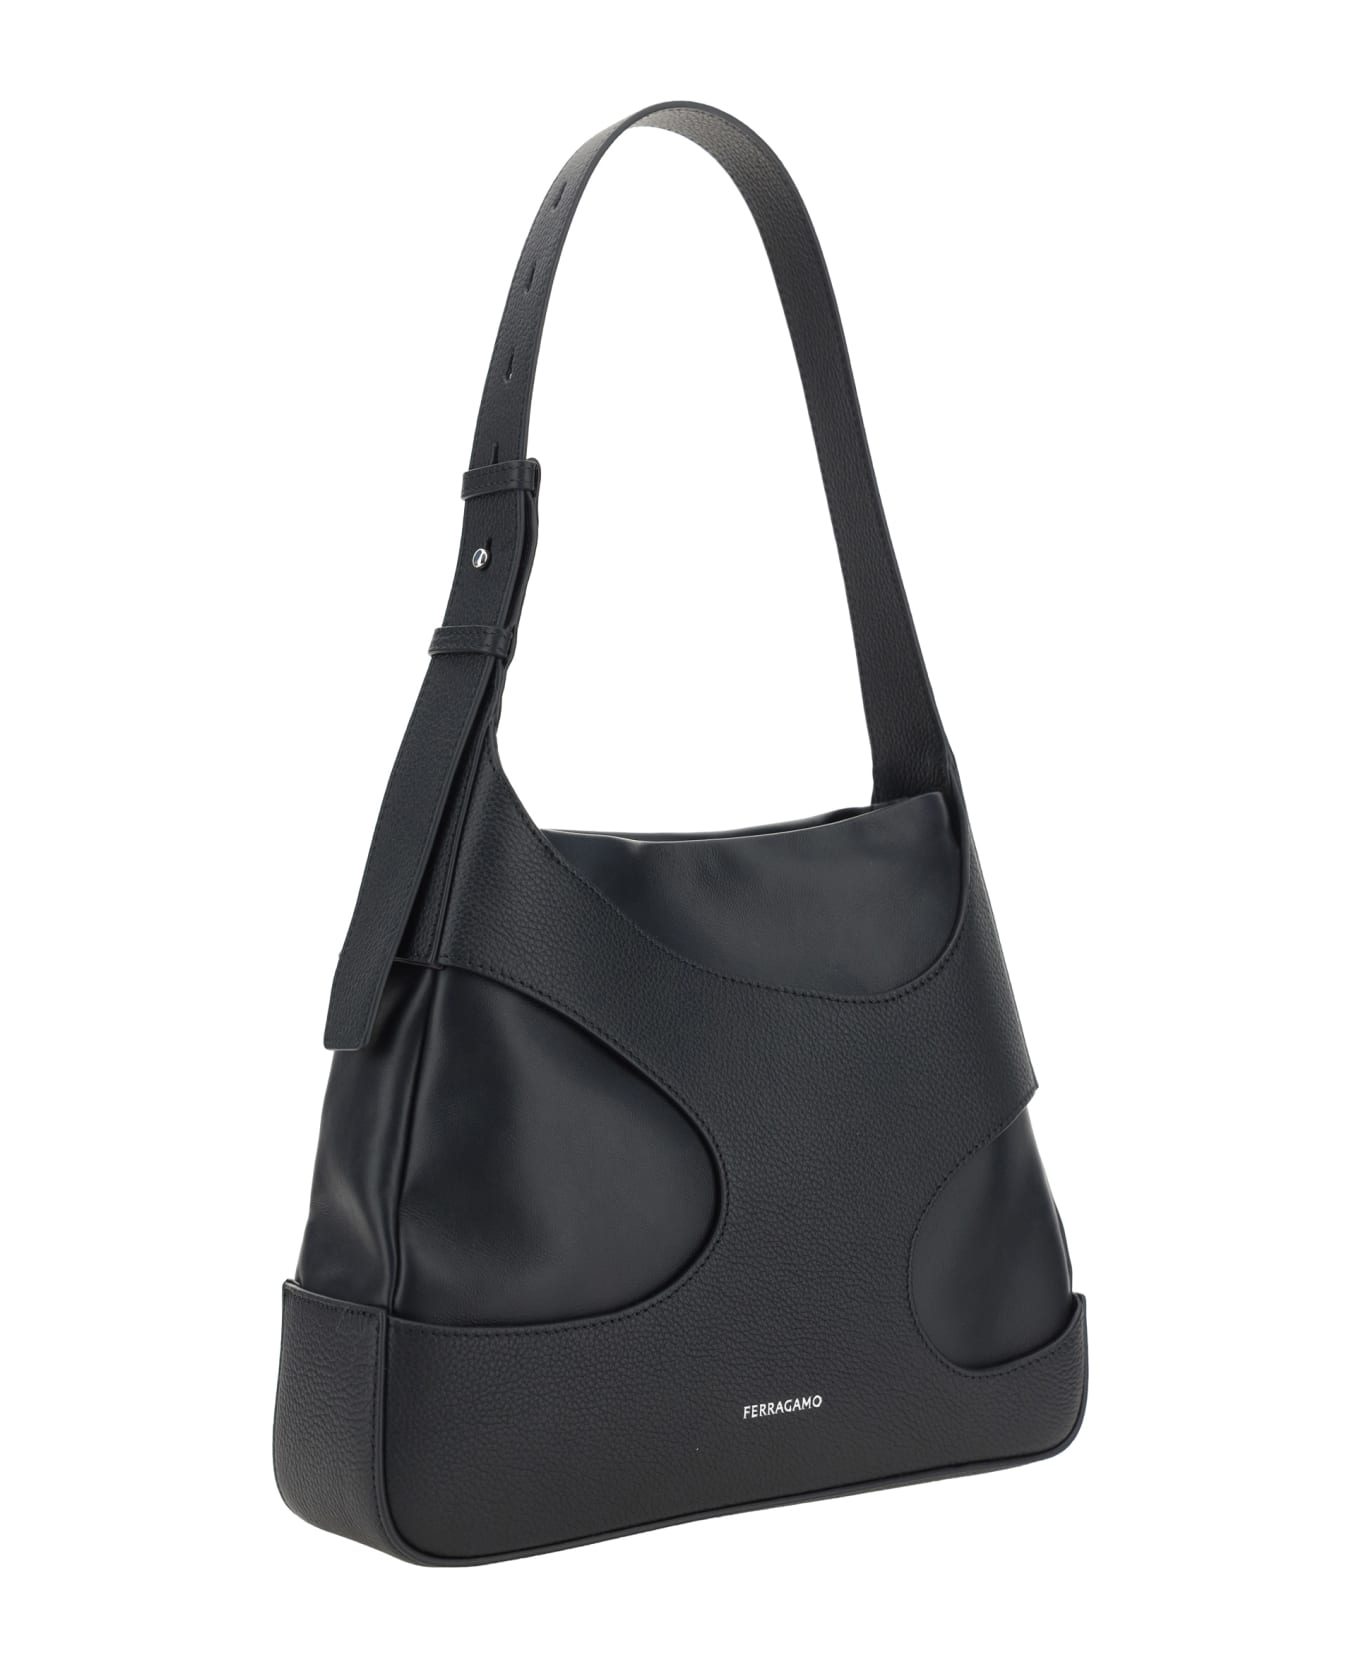 Ferragamo Shoulder Bag - Black